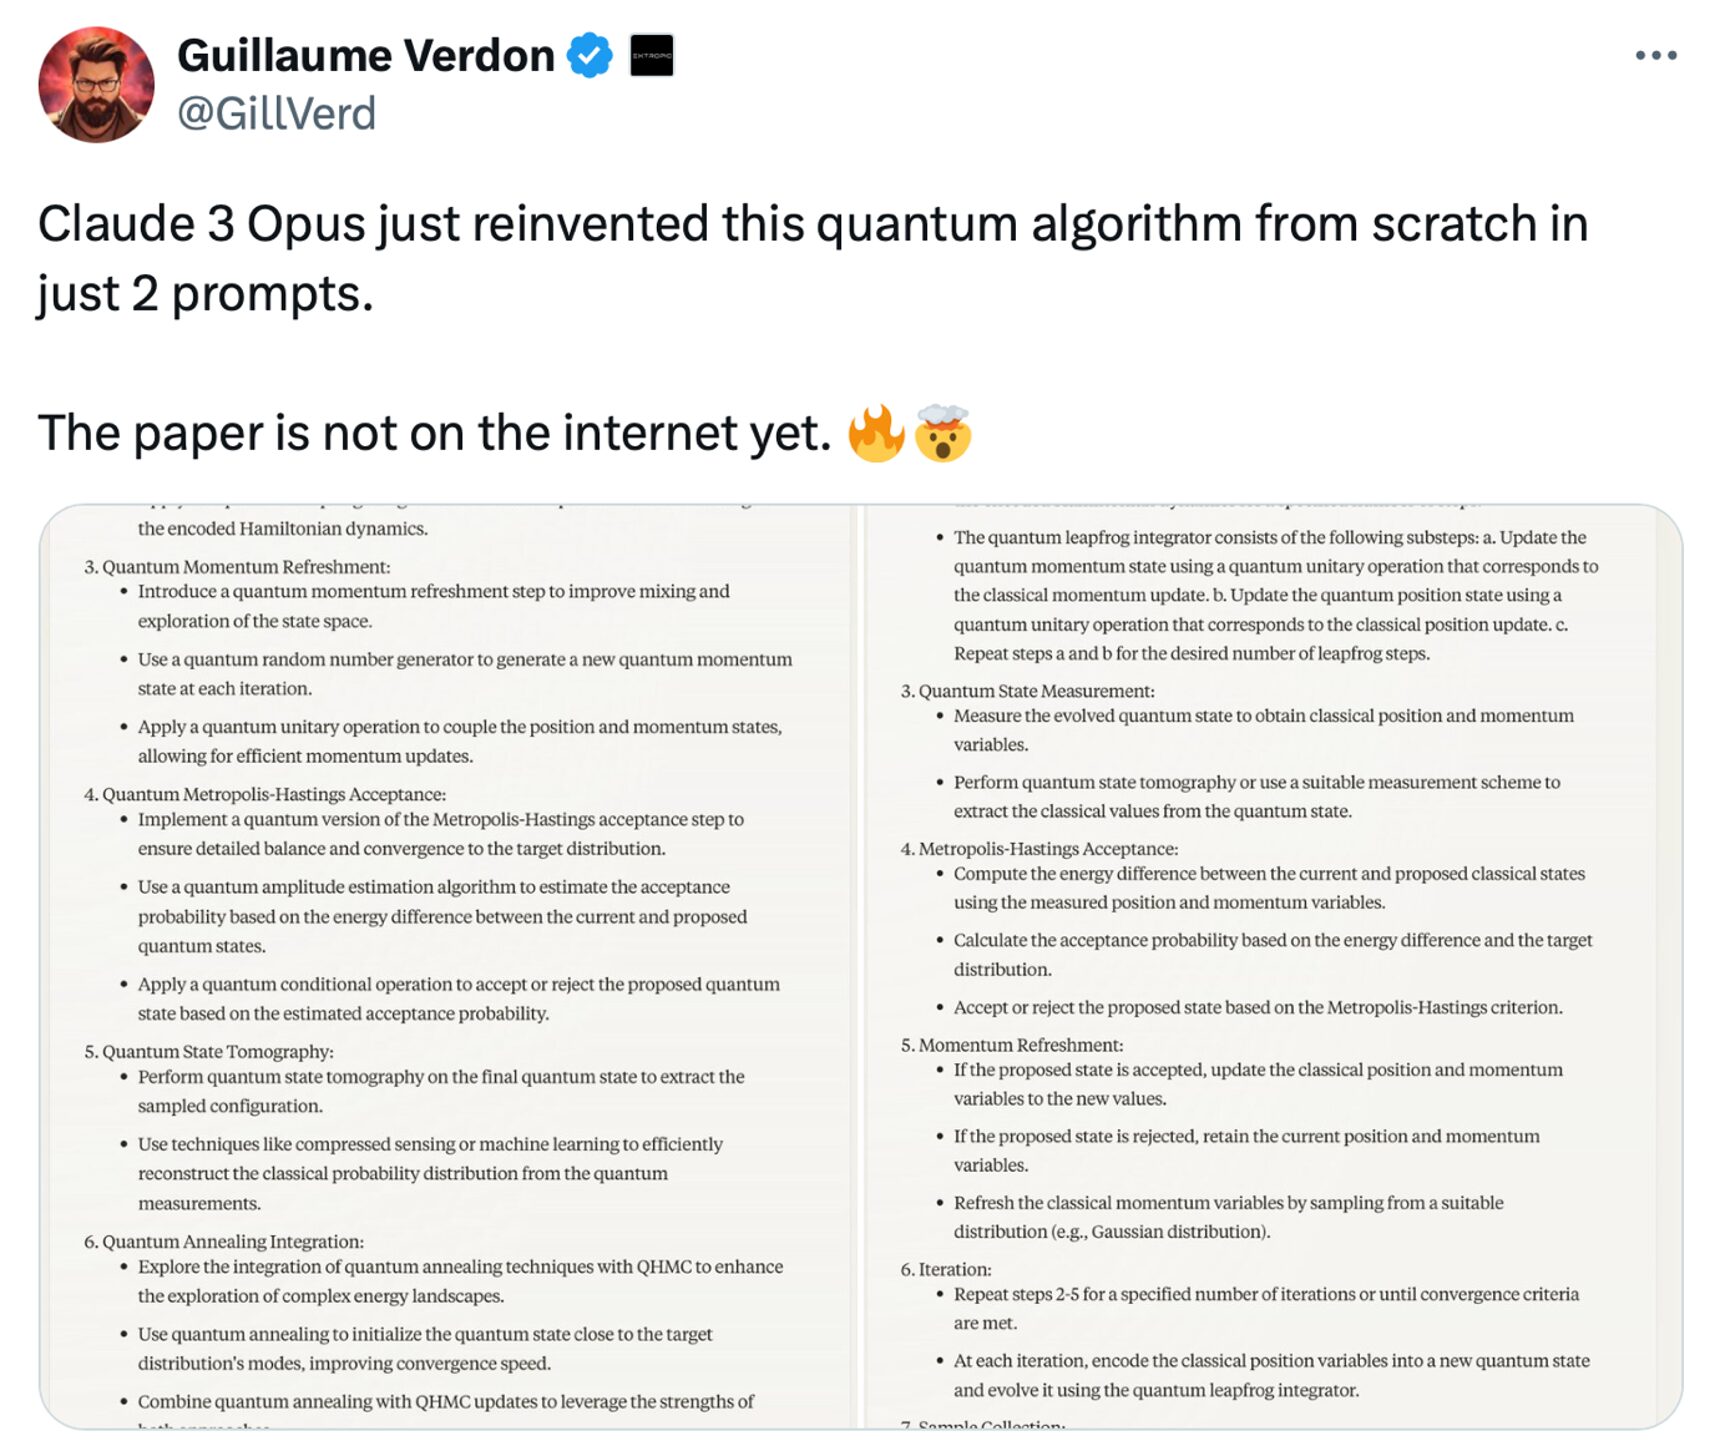 A screen snip of Guillaume Verdon's Tweet on Claude